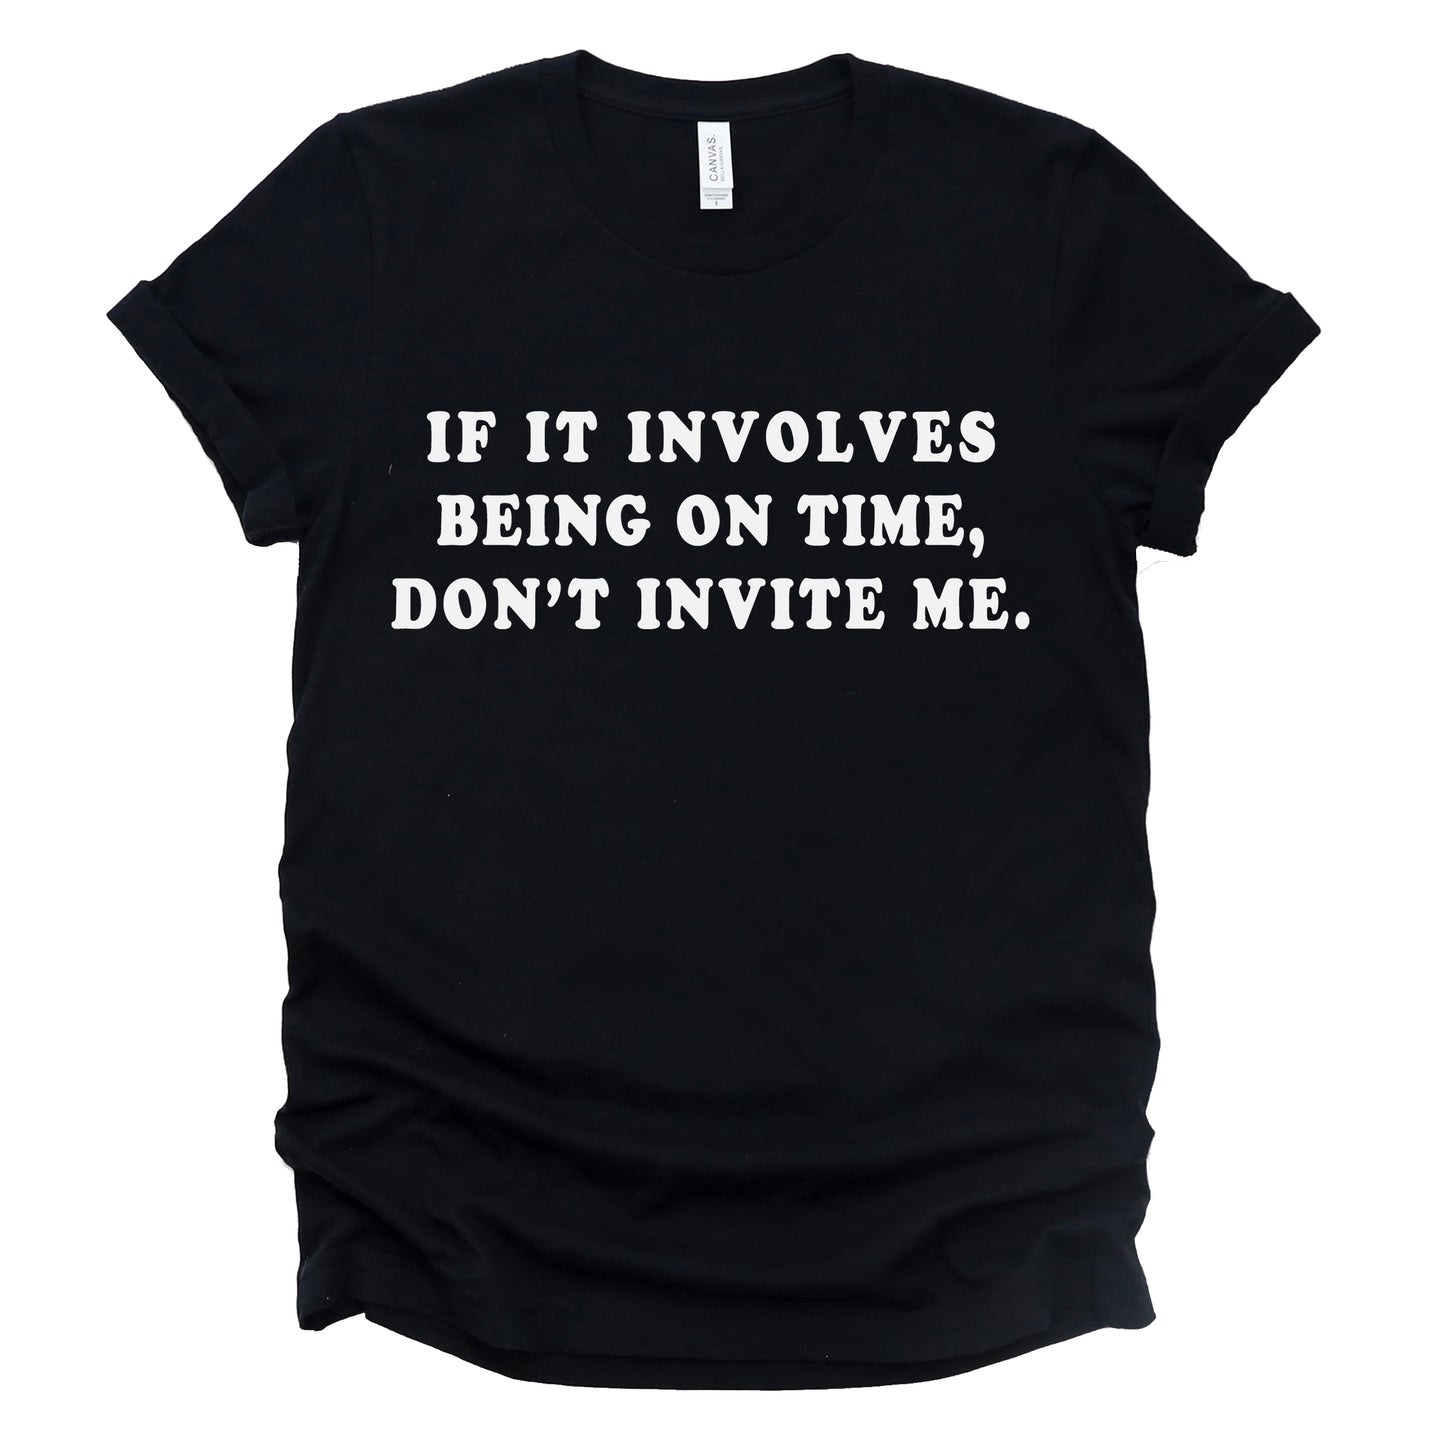 "Don't Invite Me" Tee